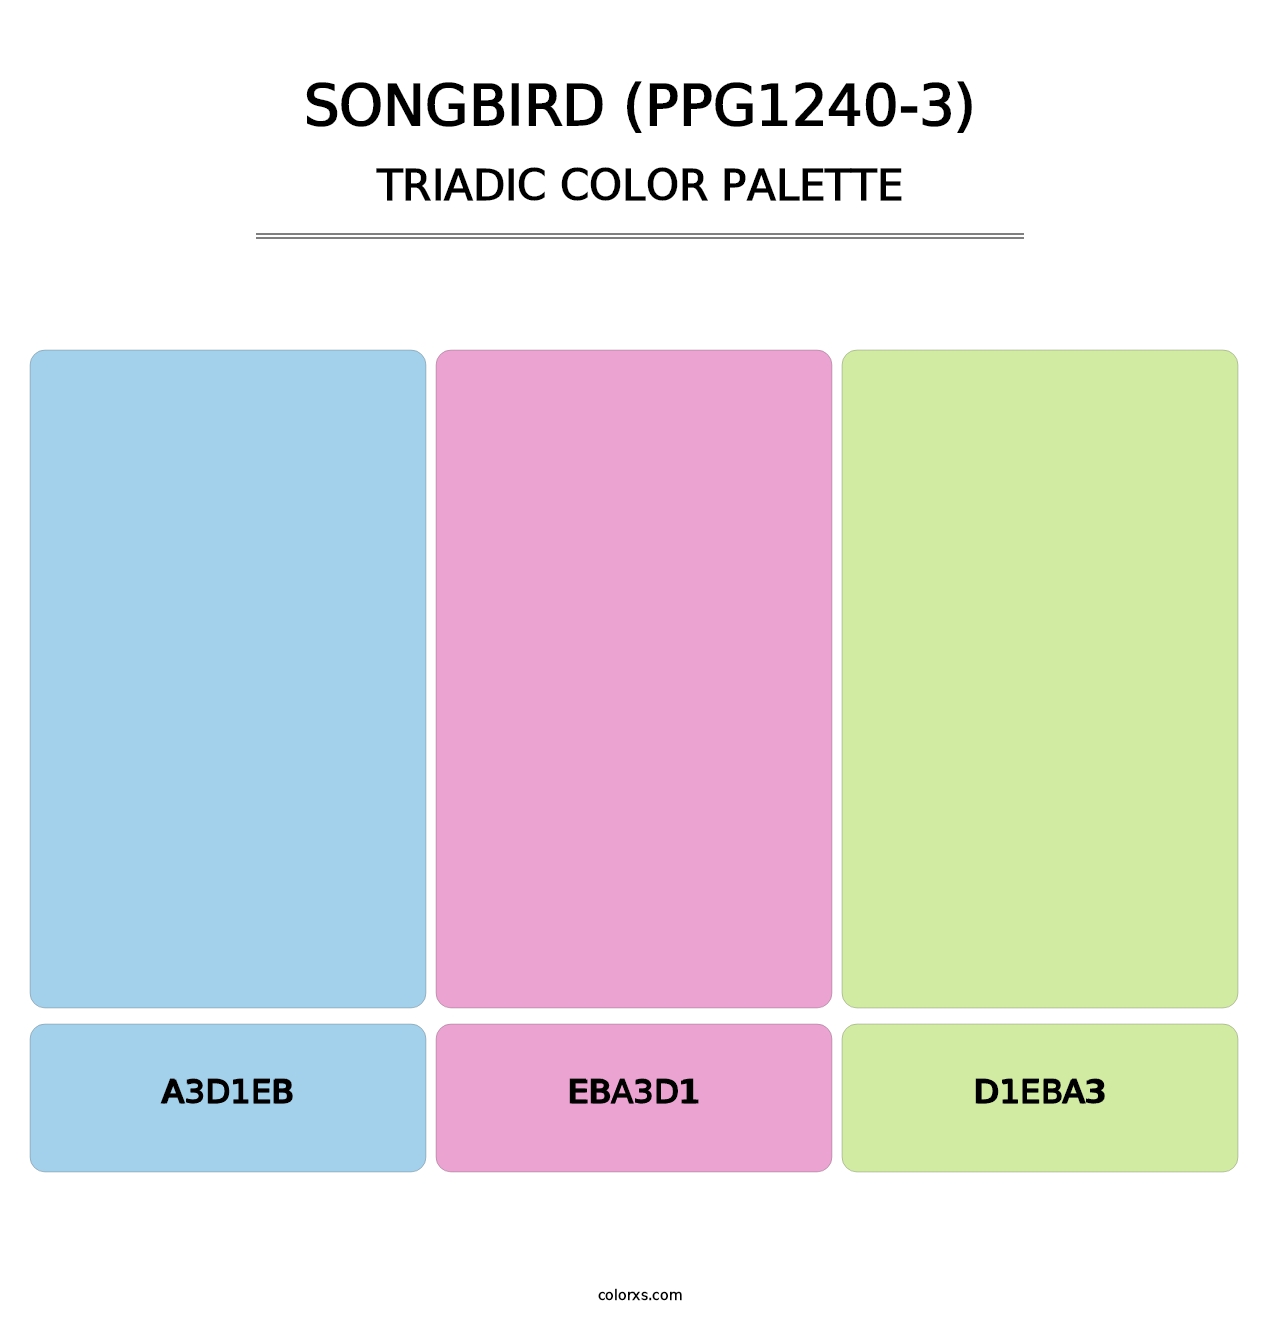 Songbird (PPG1240-3) - Triadic Color Palette